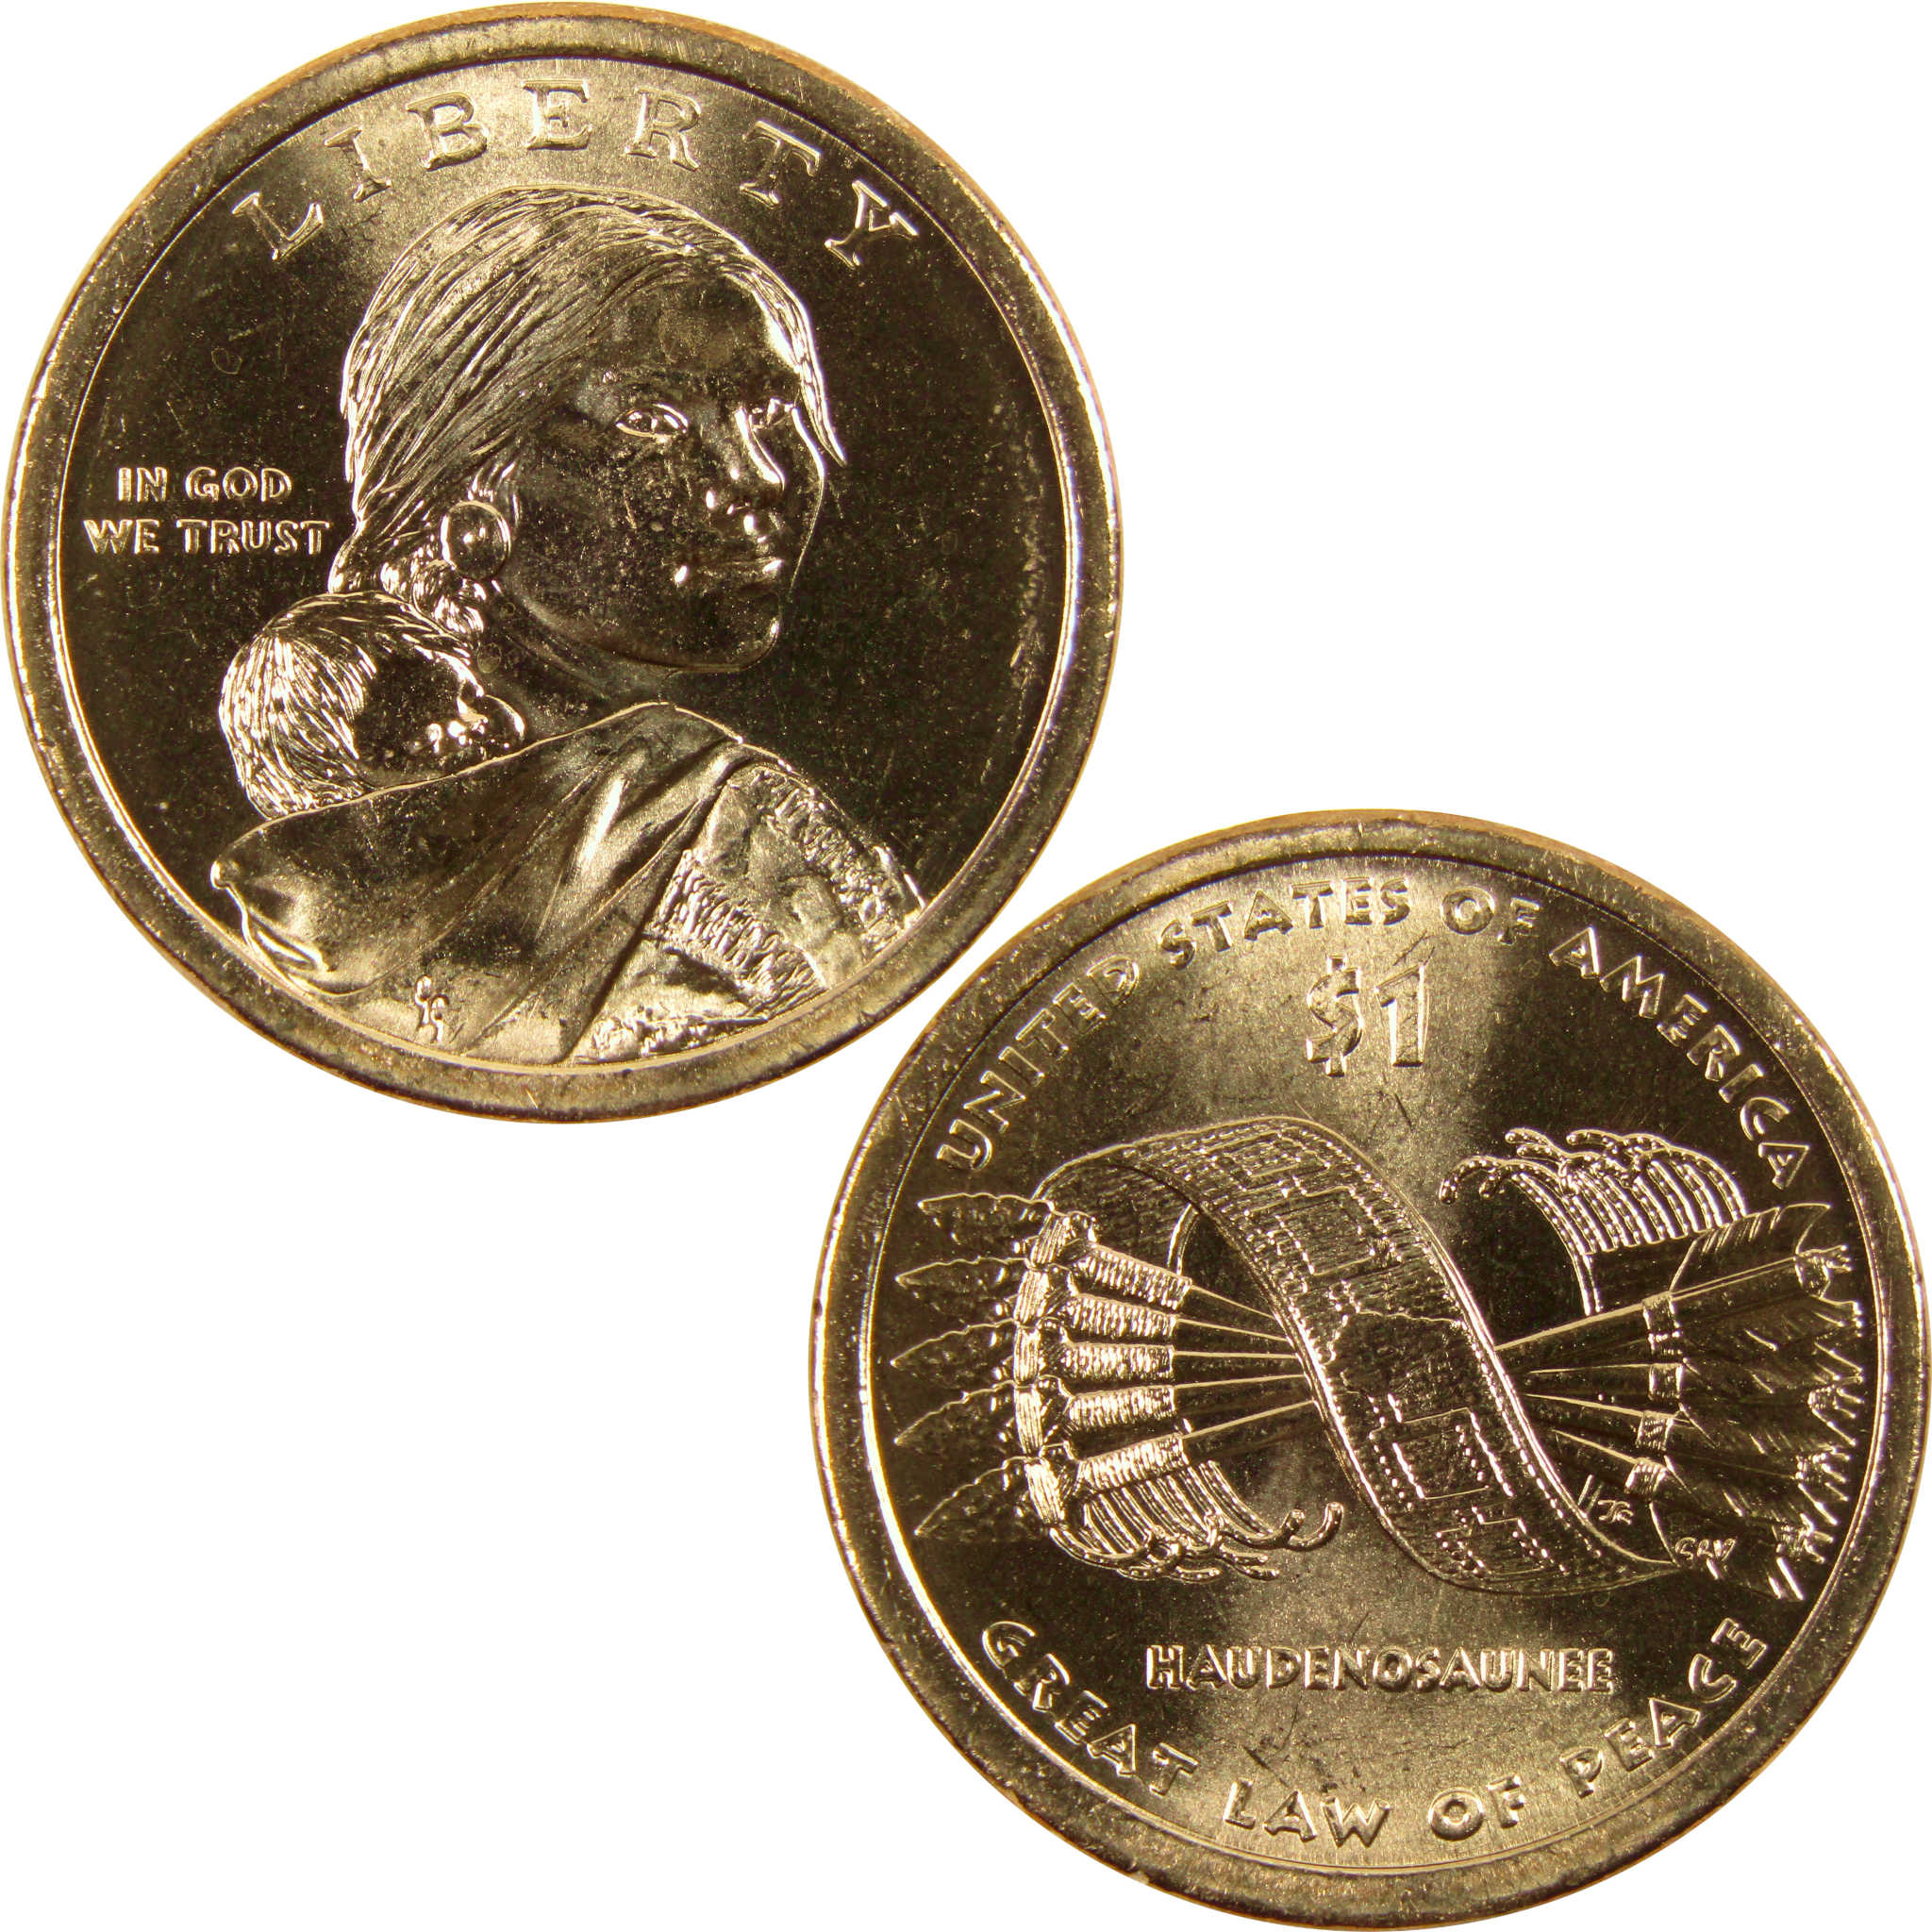 2010 P Great Law of Peace Native American Dollar BU Uncirculated $1